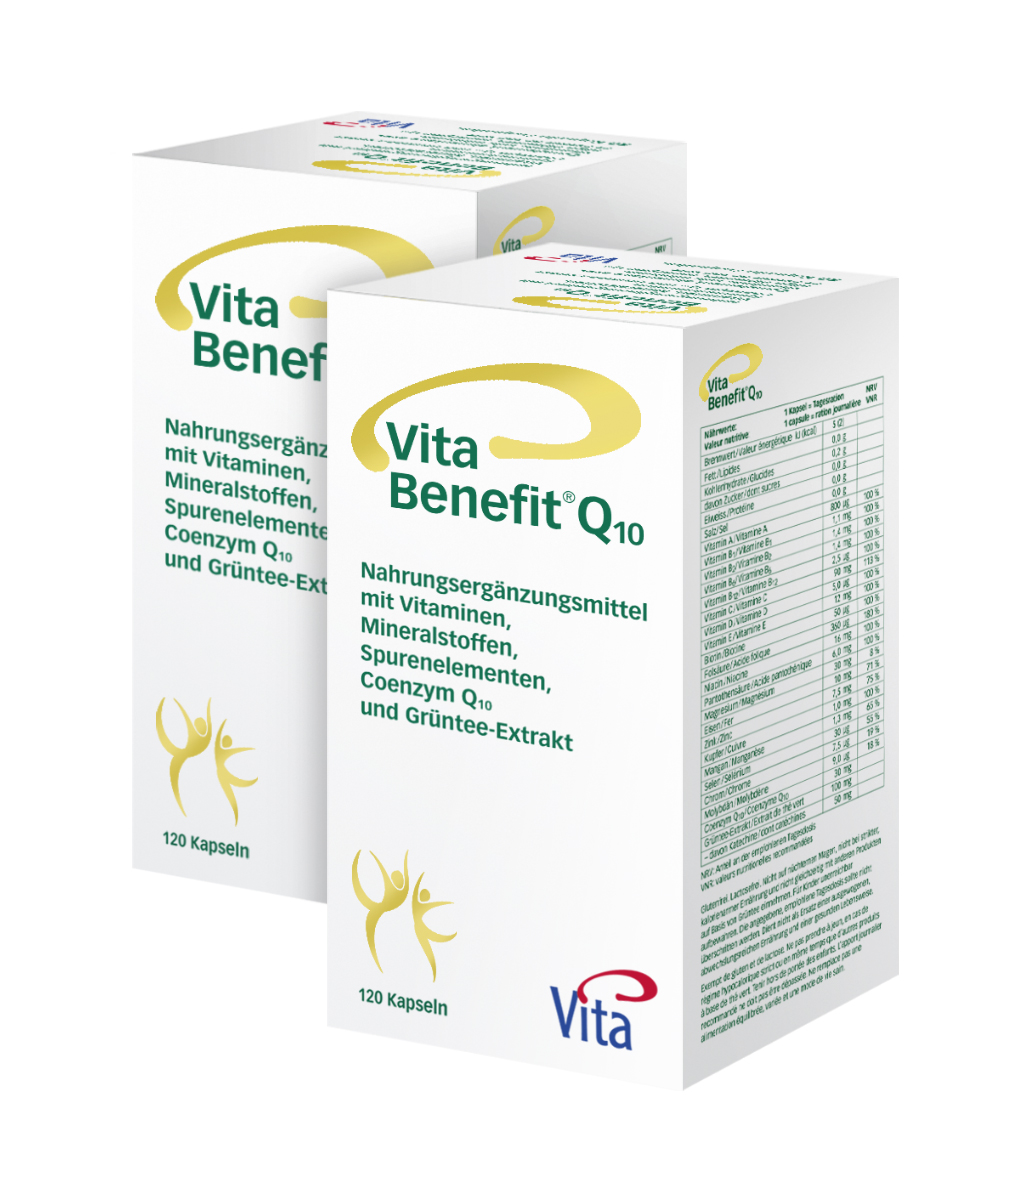  Vita Benefit® Q10 & Double pack 